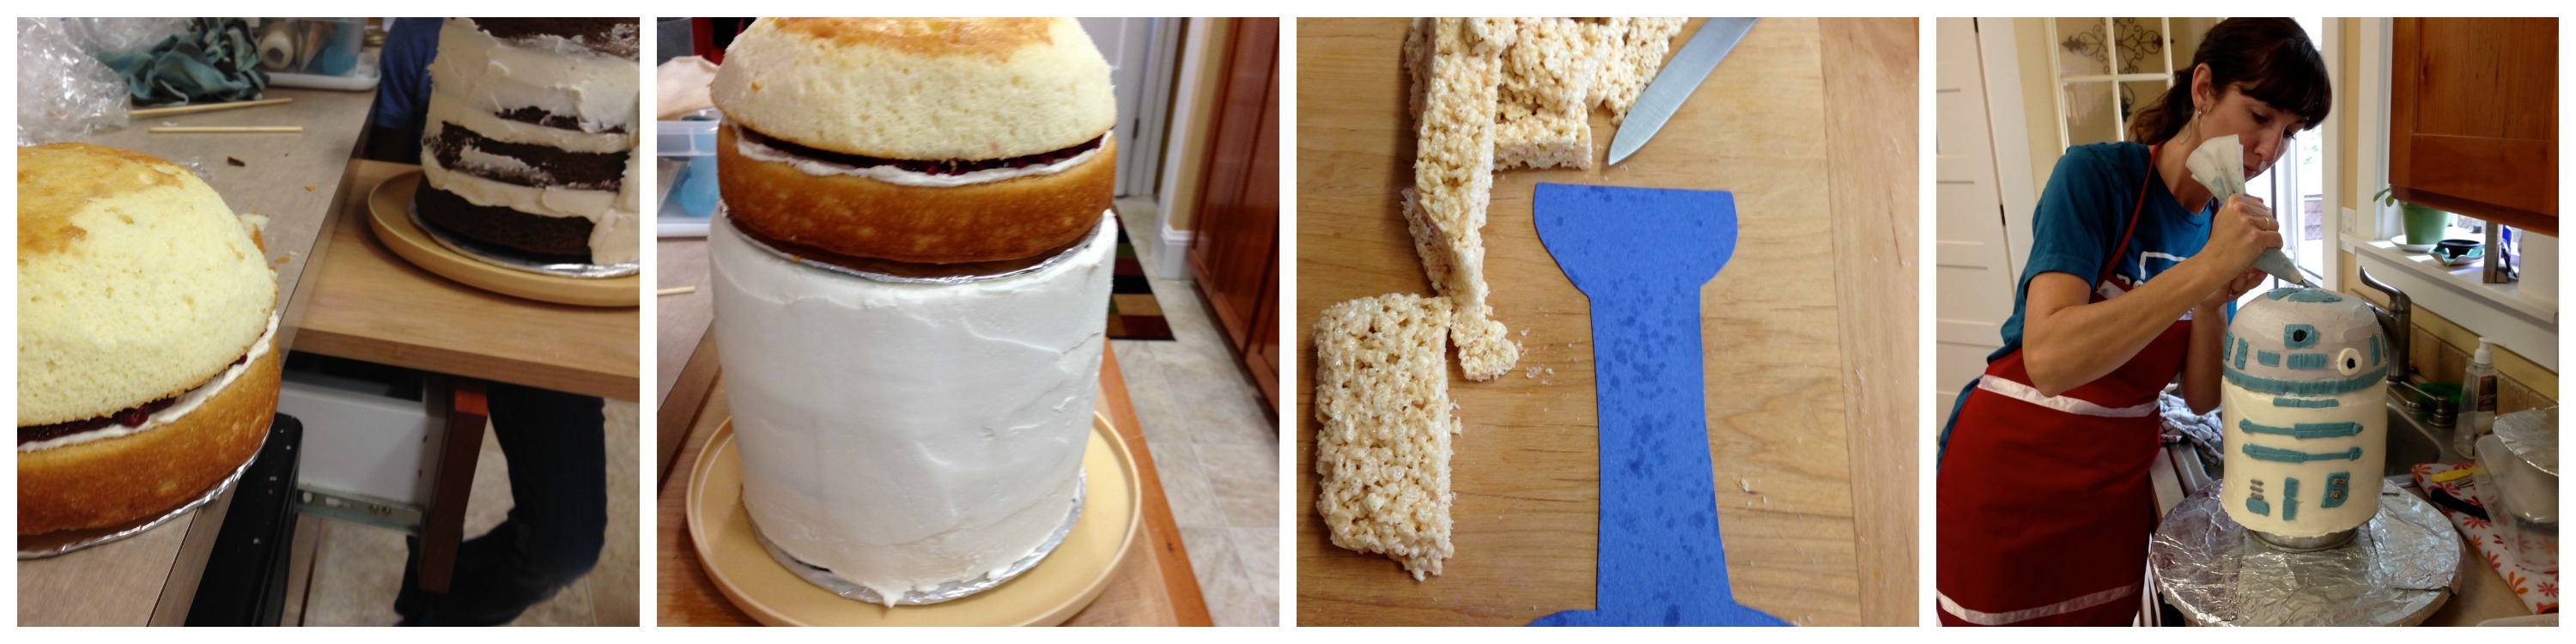 R2D2 cake collage 1